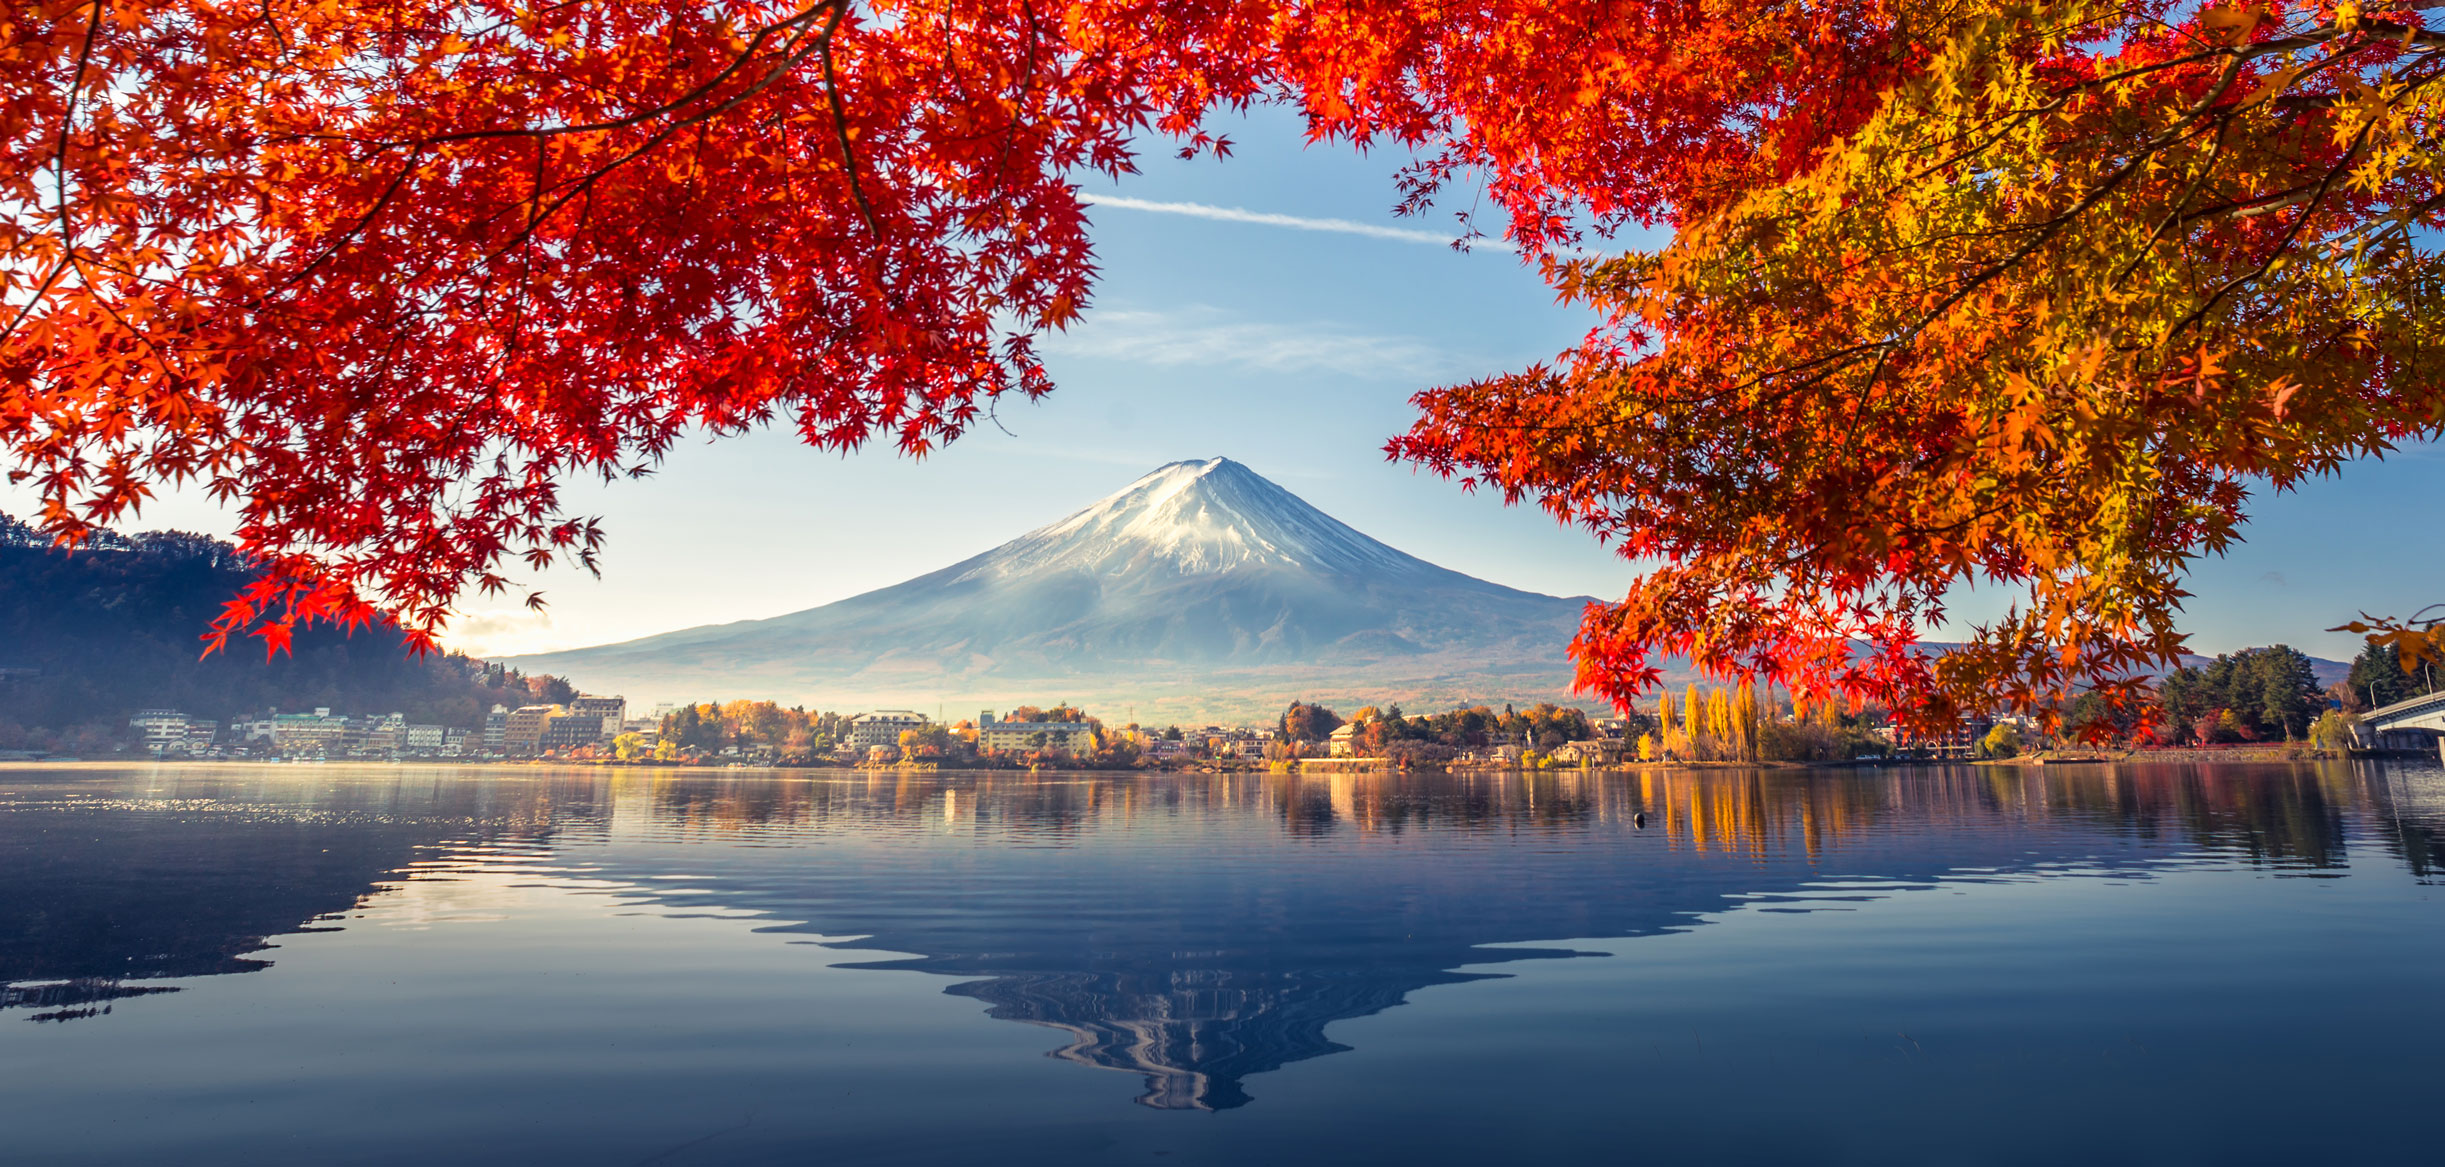 Mount Fuji, Japan with red, orange, yellow leaves tree.